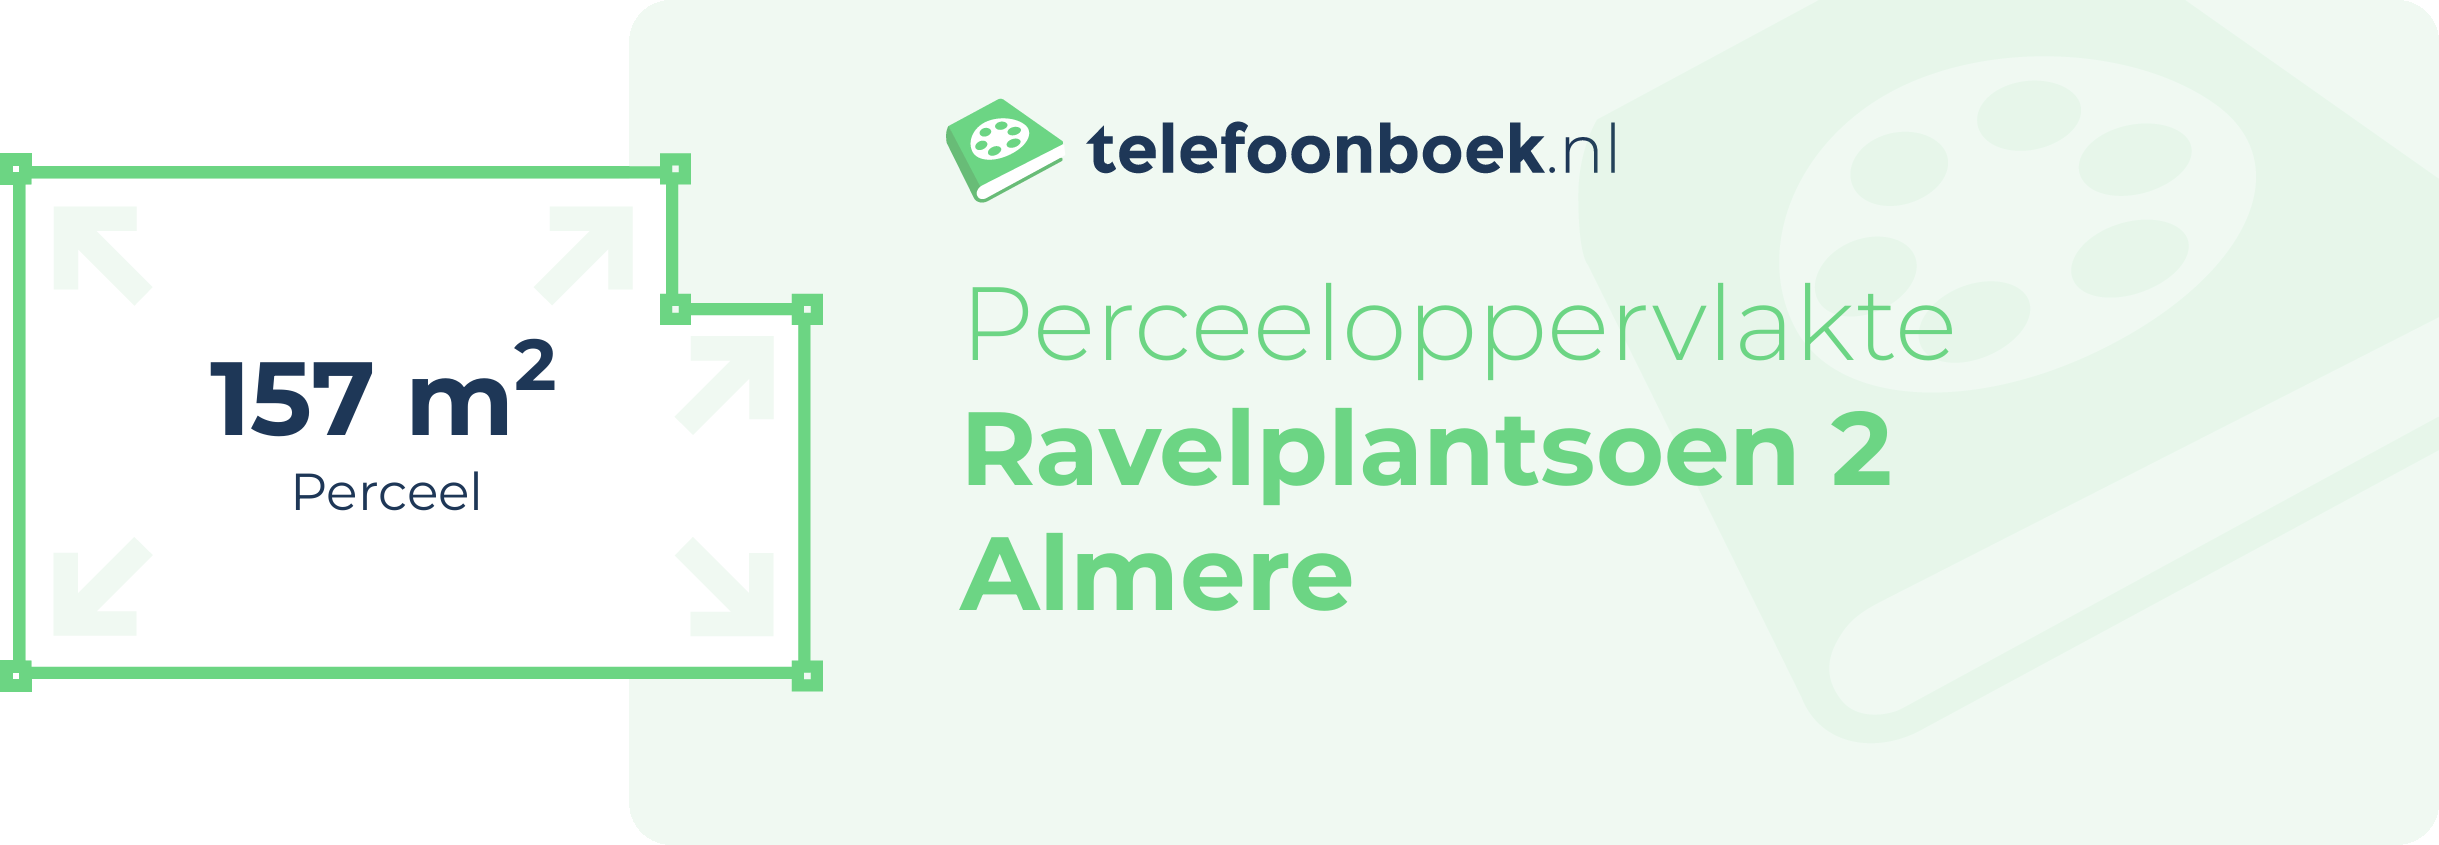 Perceeloppervlakte Ravelplantsoen 2 Almere